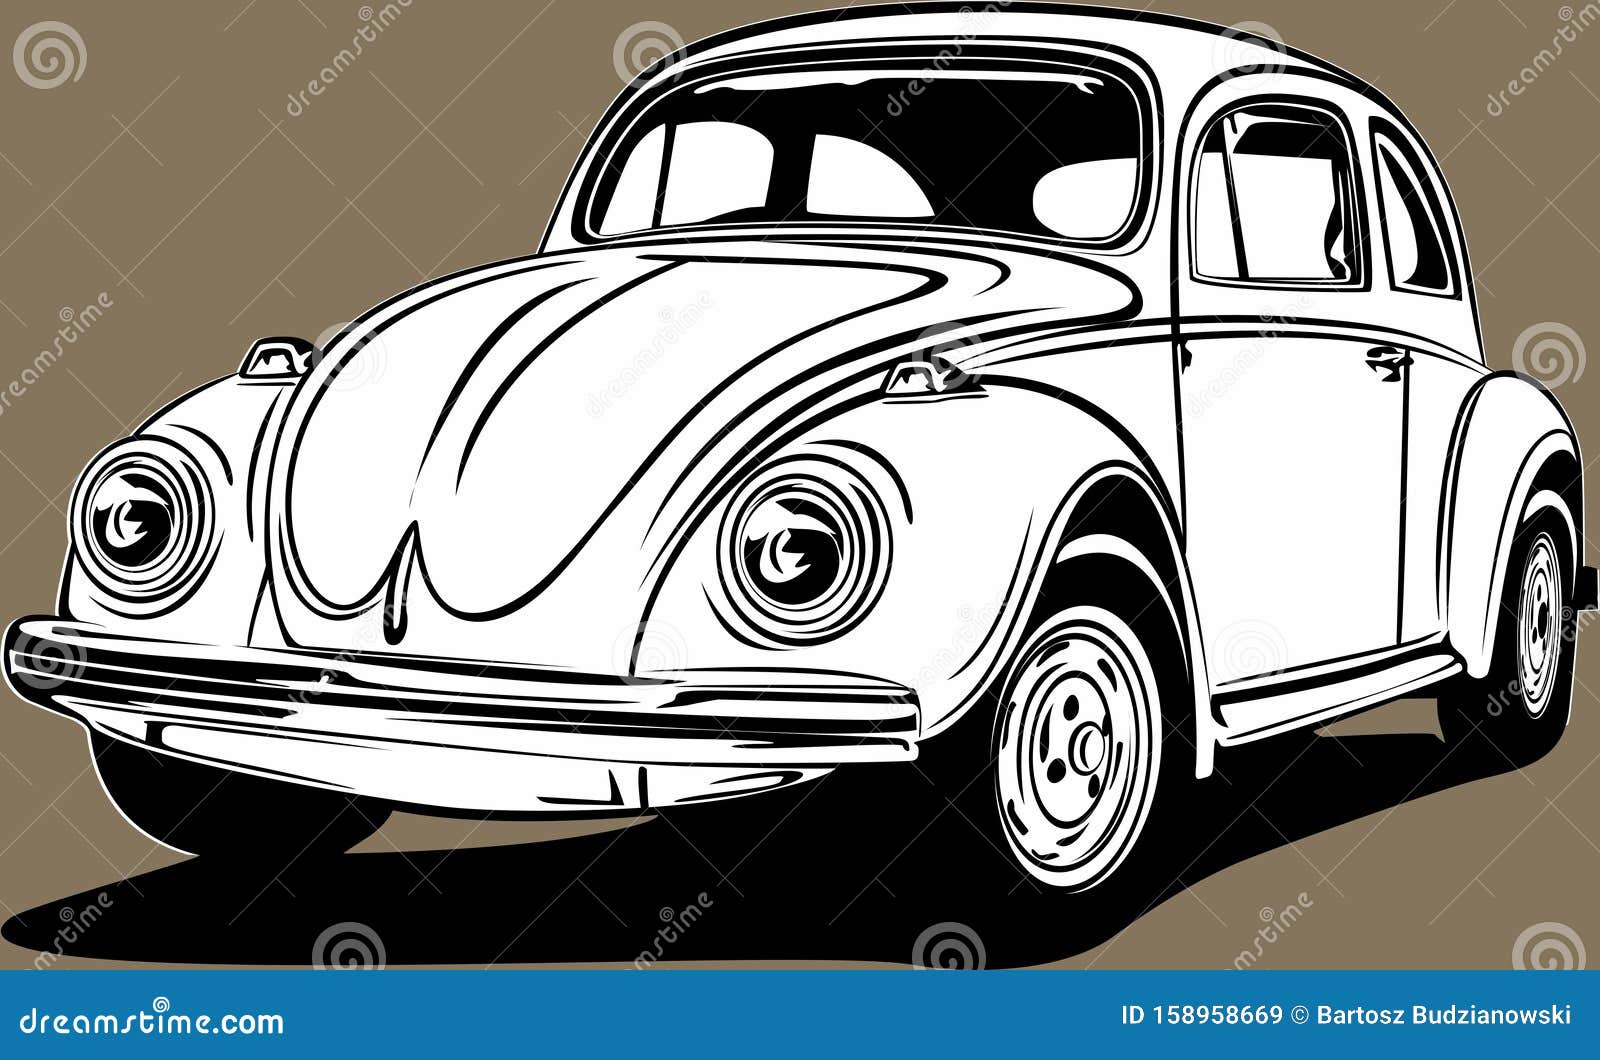 classic vintage retro car image vw bug